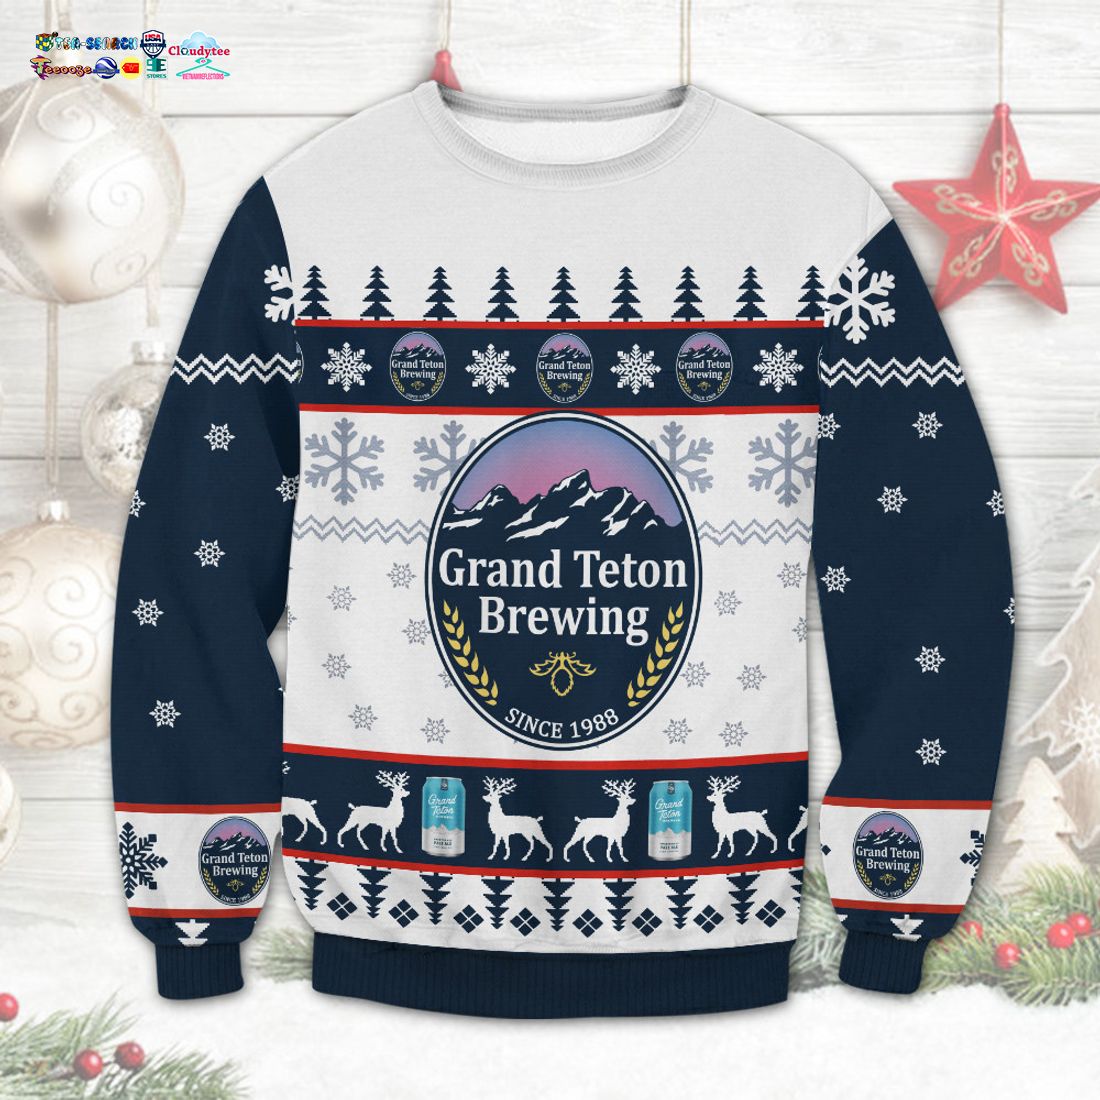 Grand Teton Brewing Ugly Christmas Sweater - Gang of rockstars